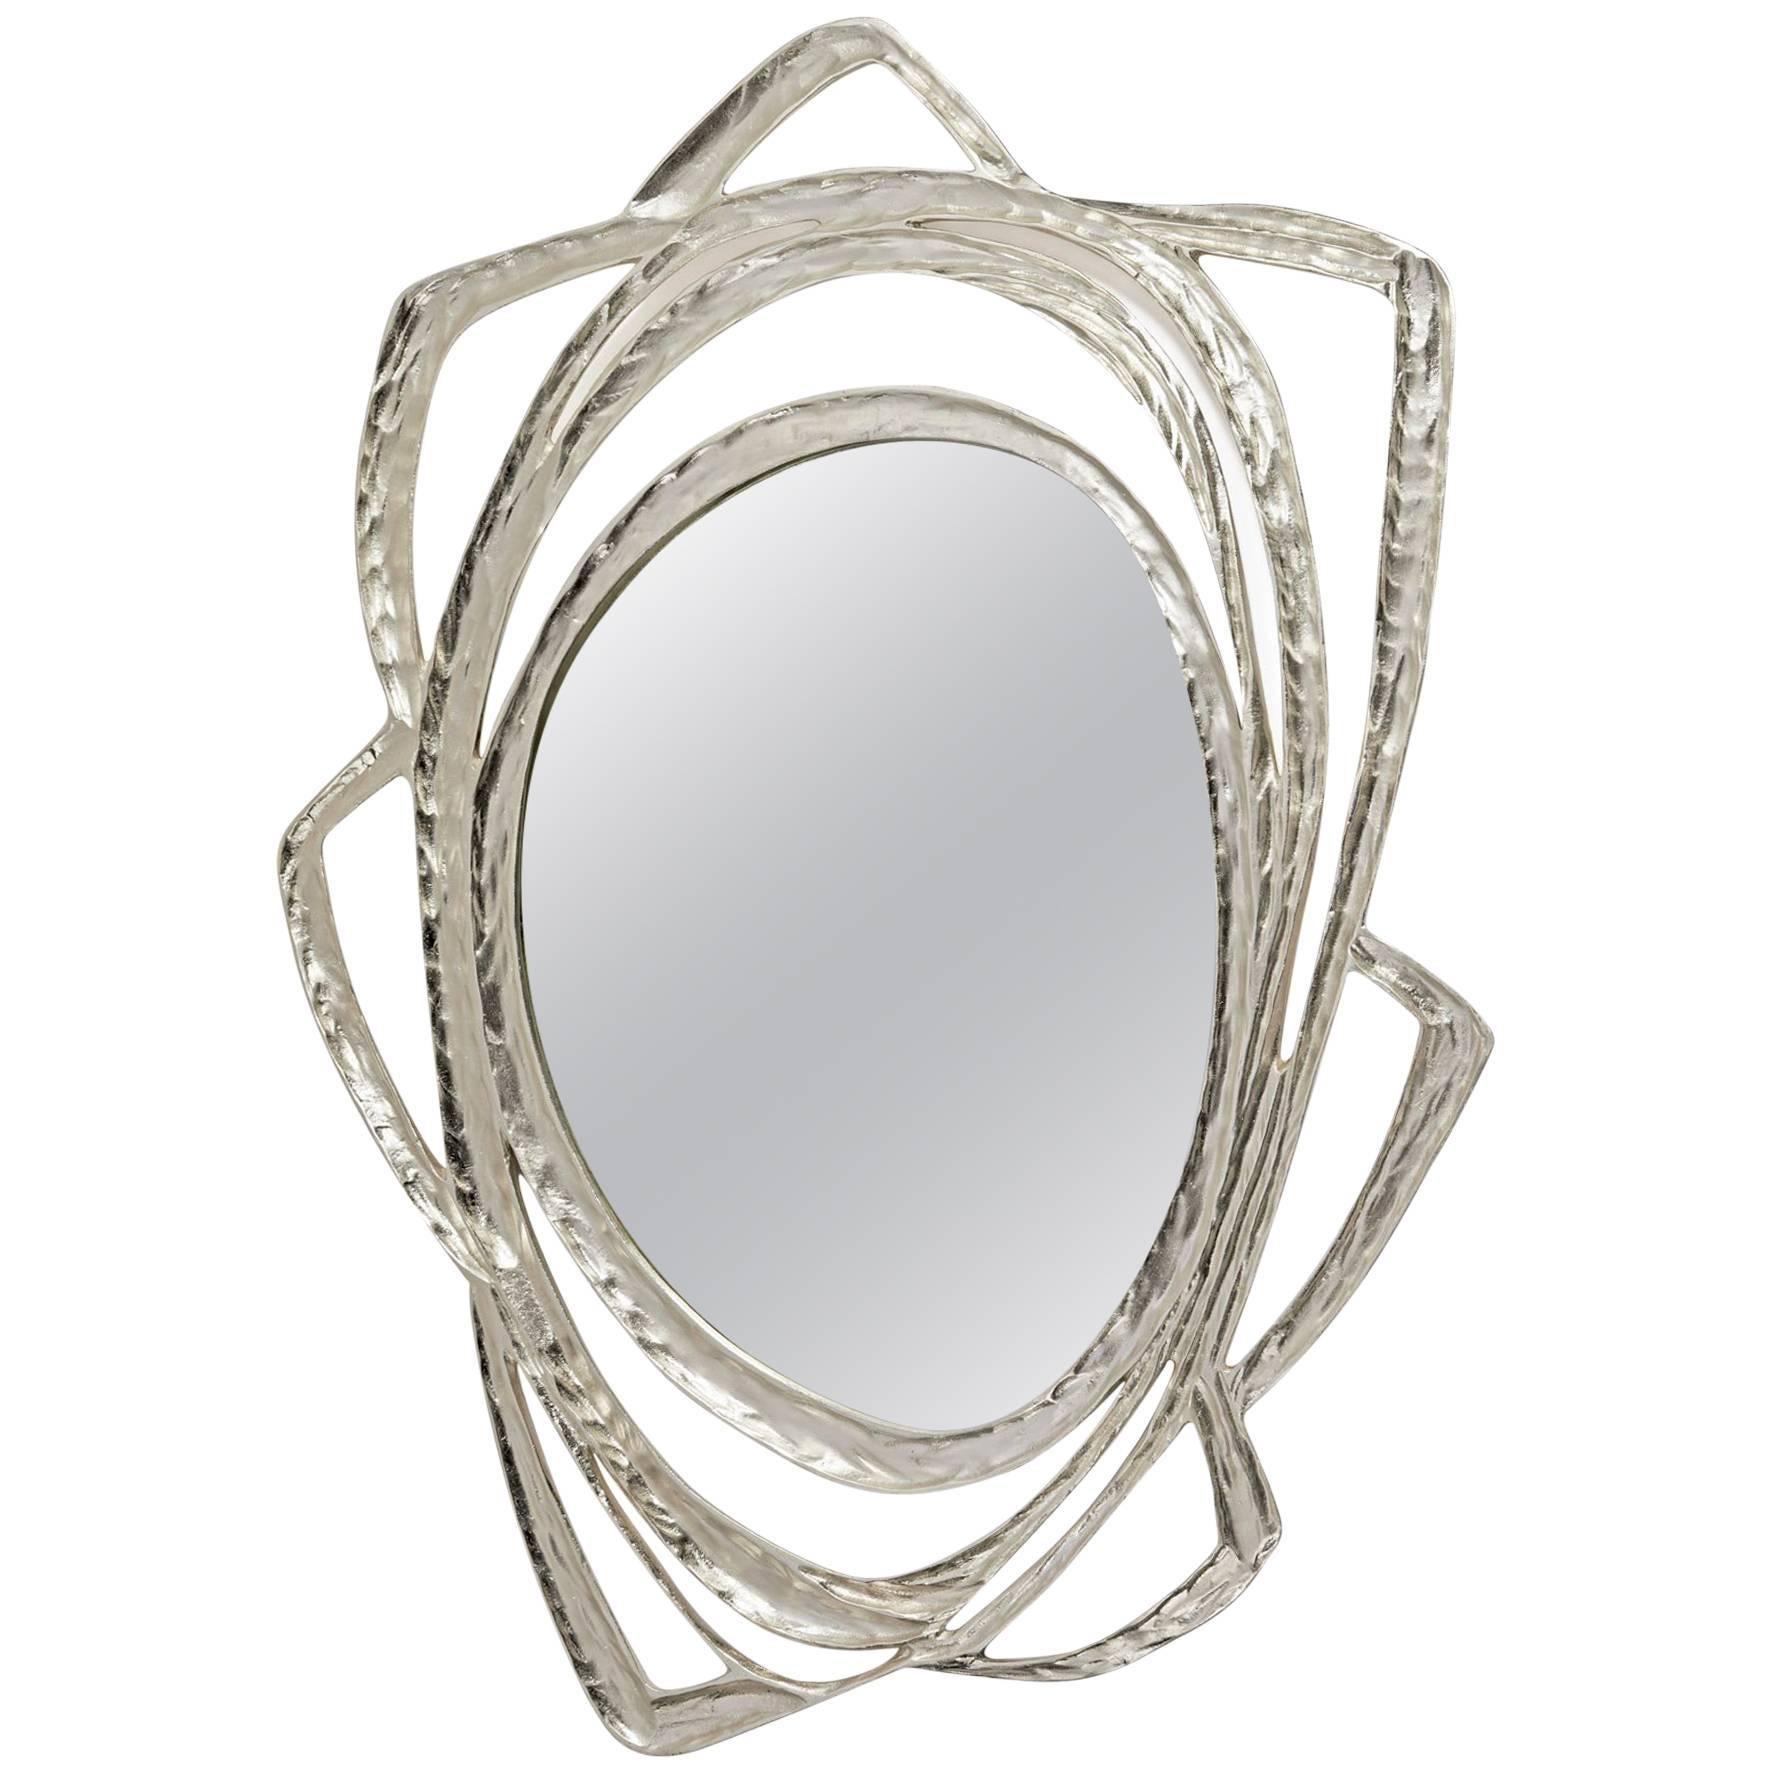 "Etoile" Mirror by Franck Evennou For Sale